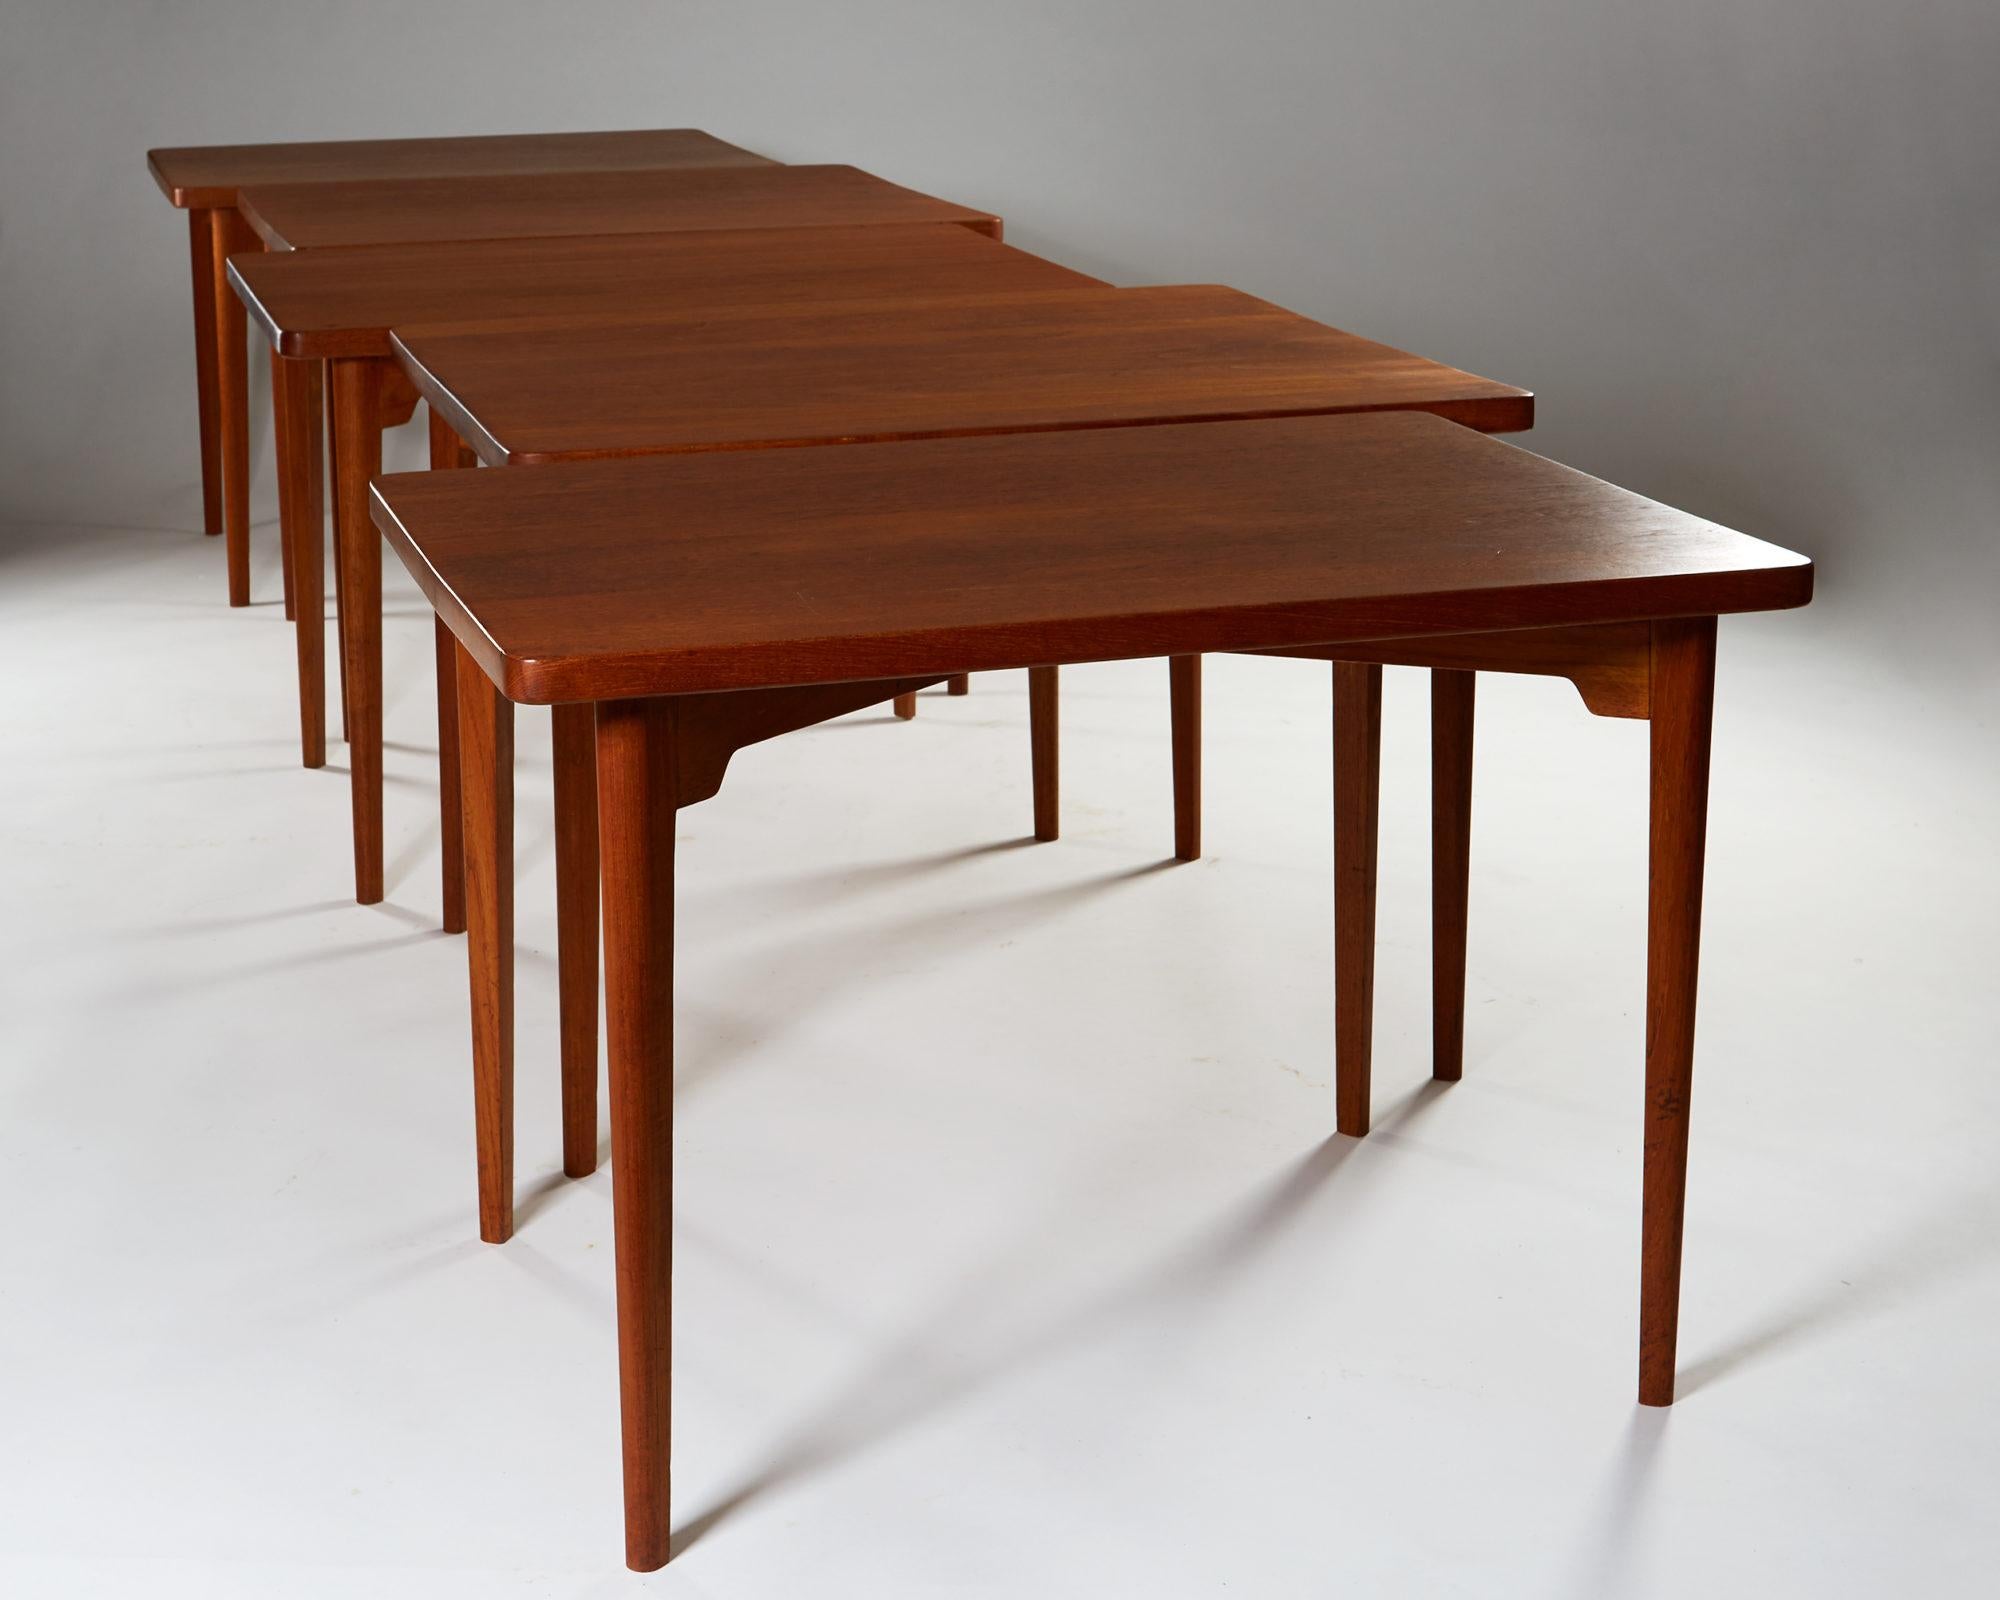 Set of five tables designed by Palle Suenson for J. C. A. Jensen,
Denmark. 1930's - 1940's.

Solid Bangkok teak.

Measurements:
H: 72,5 cm/ 2' 5